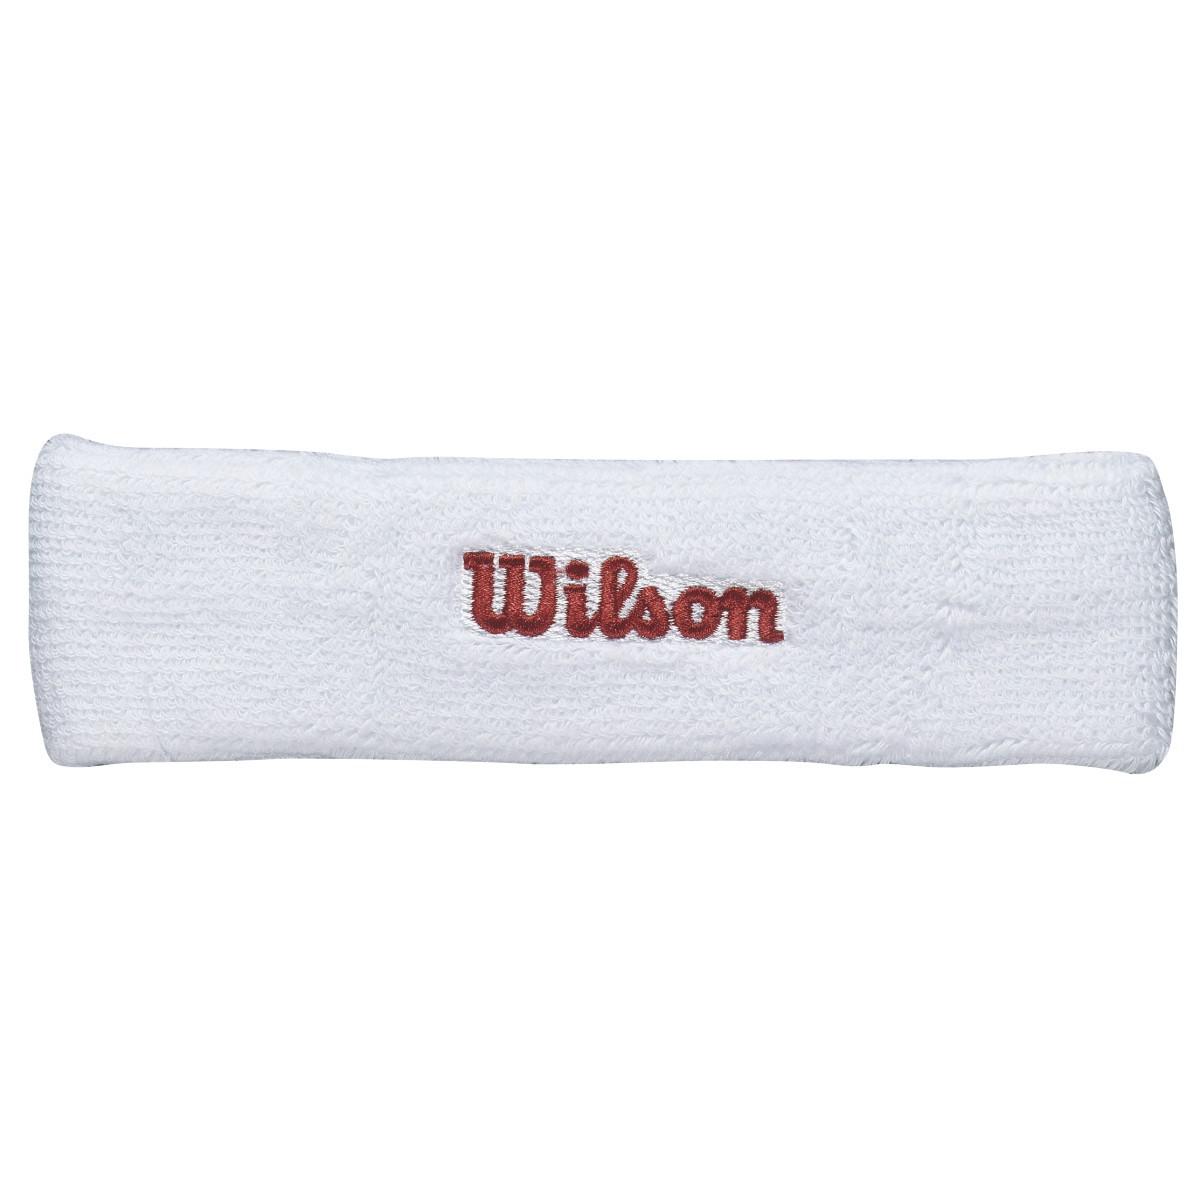 Wilson Head Band - White